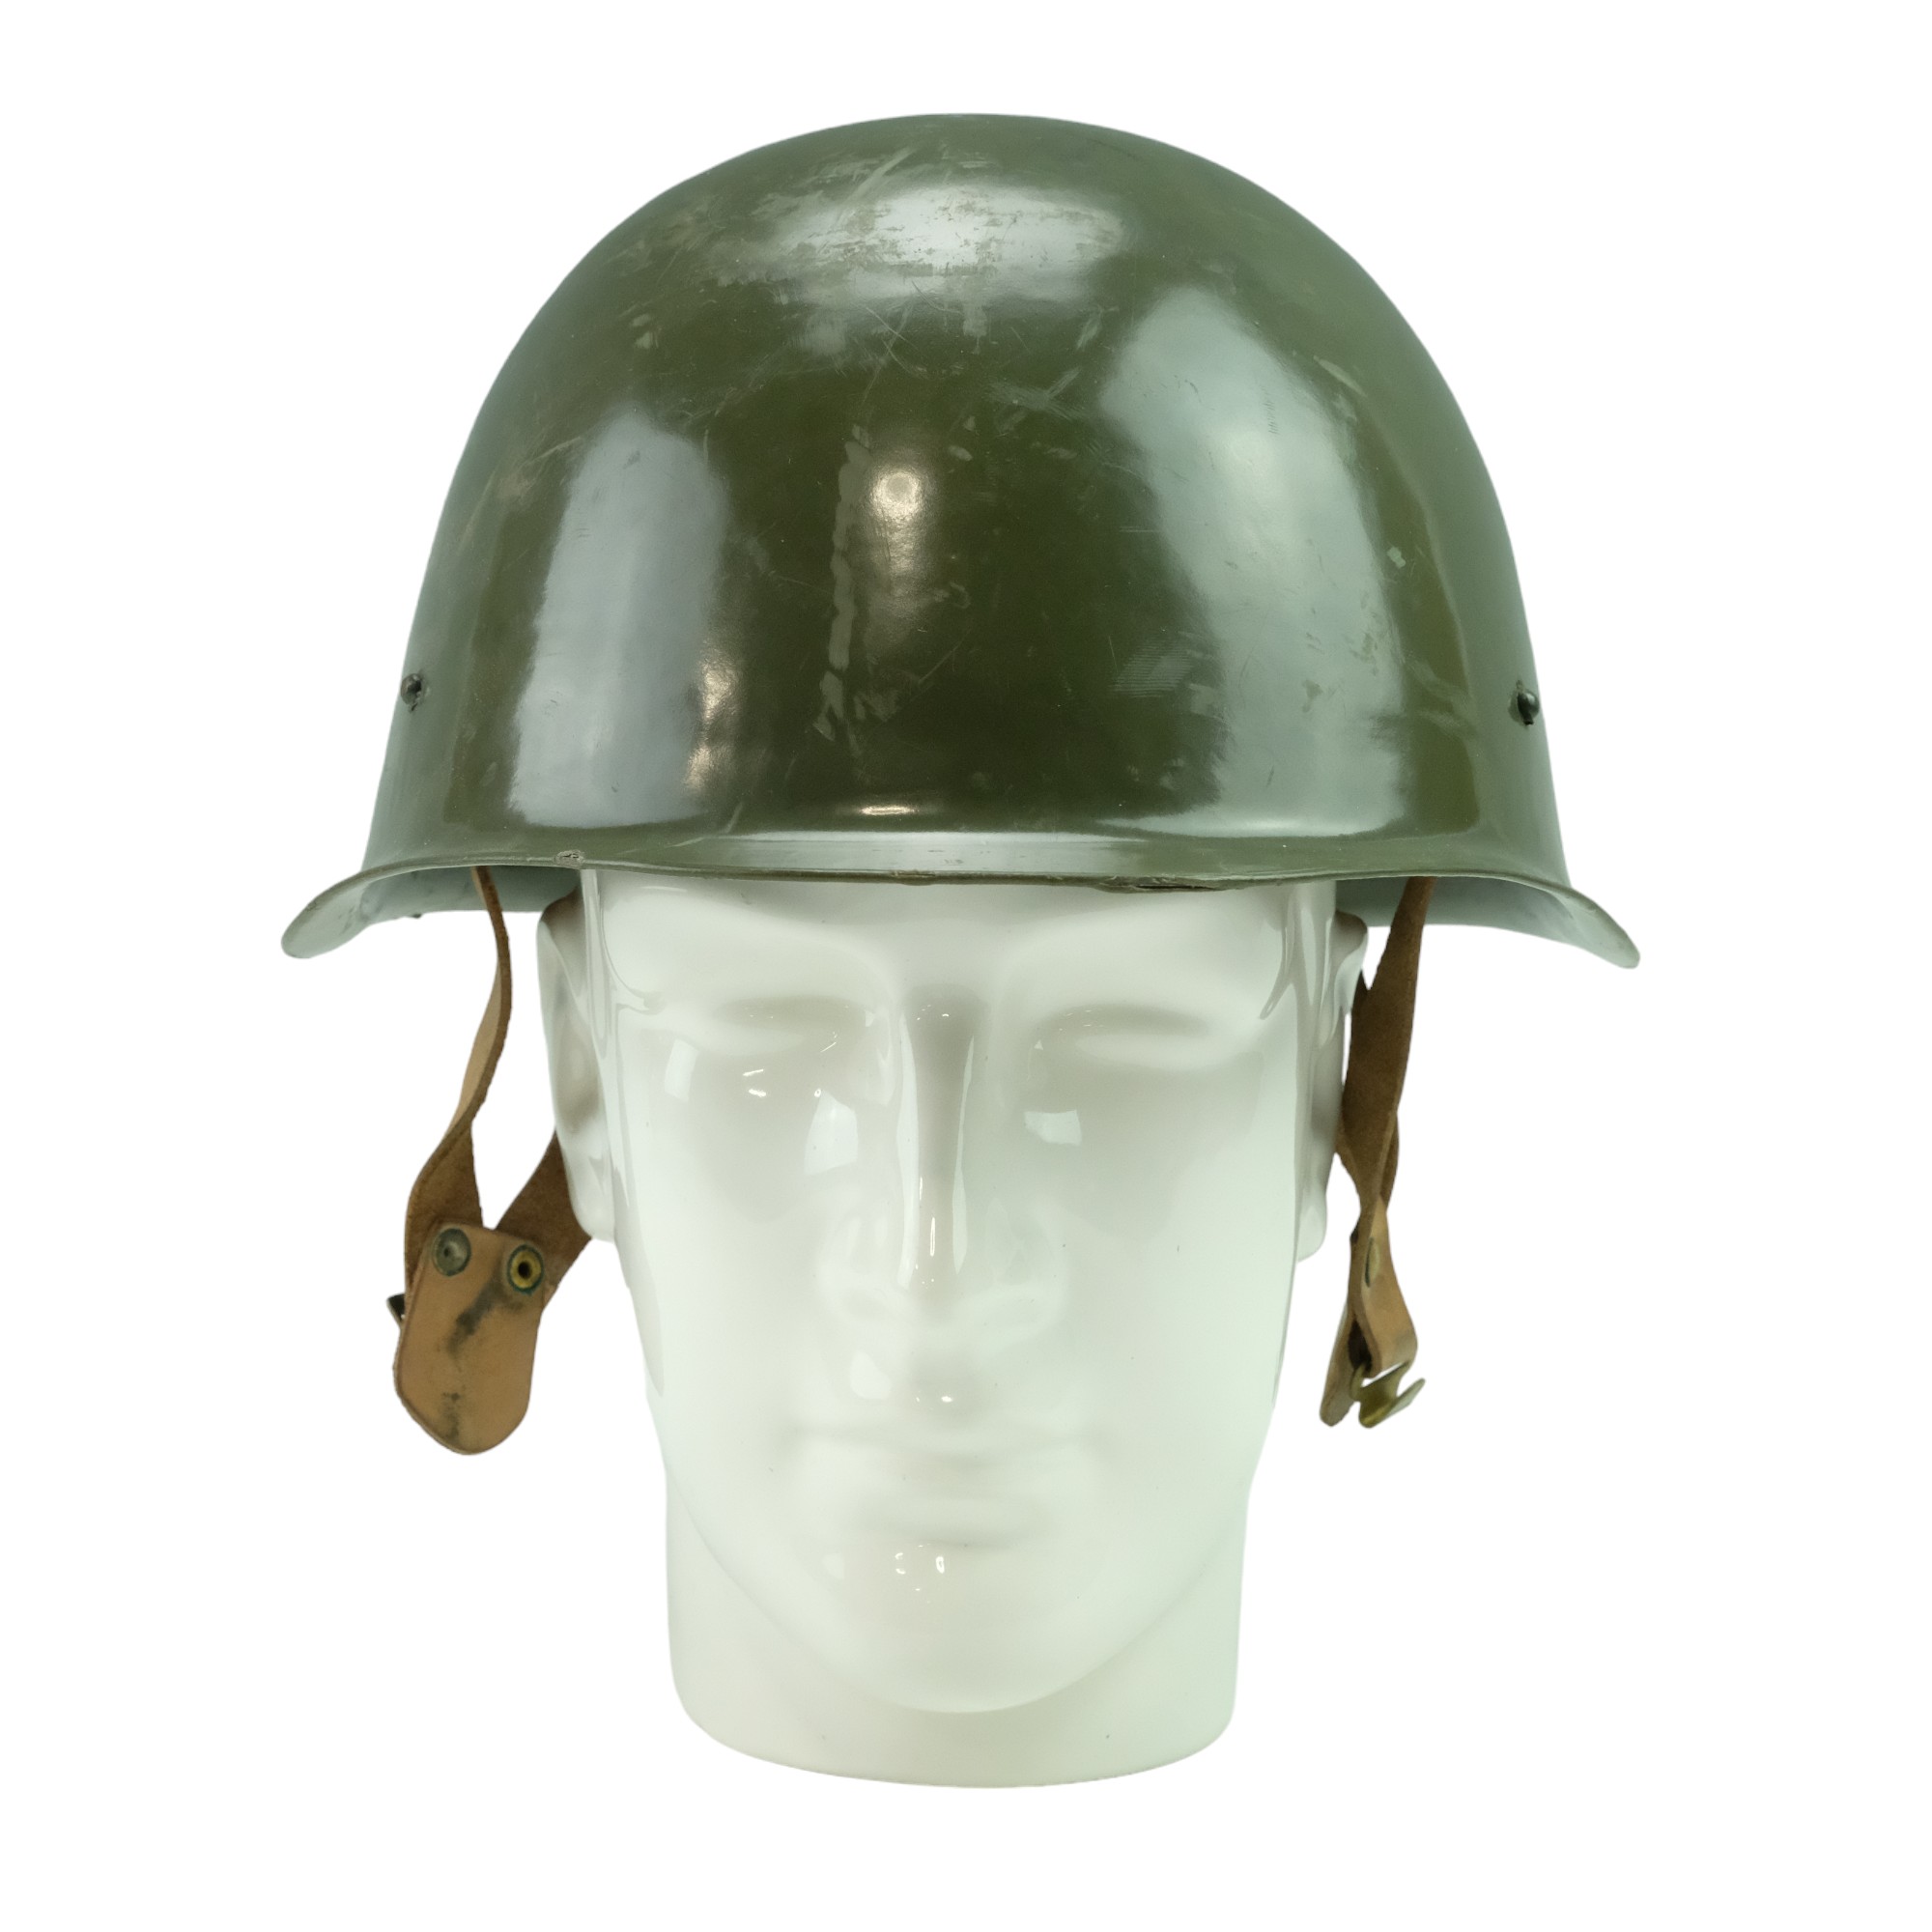 A Hungarian Ssh40 helmet - Image 2 of 6